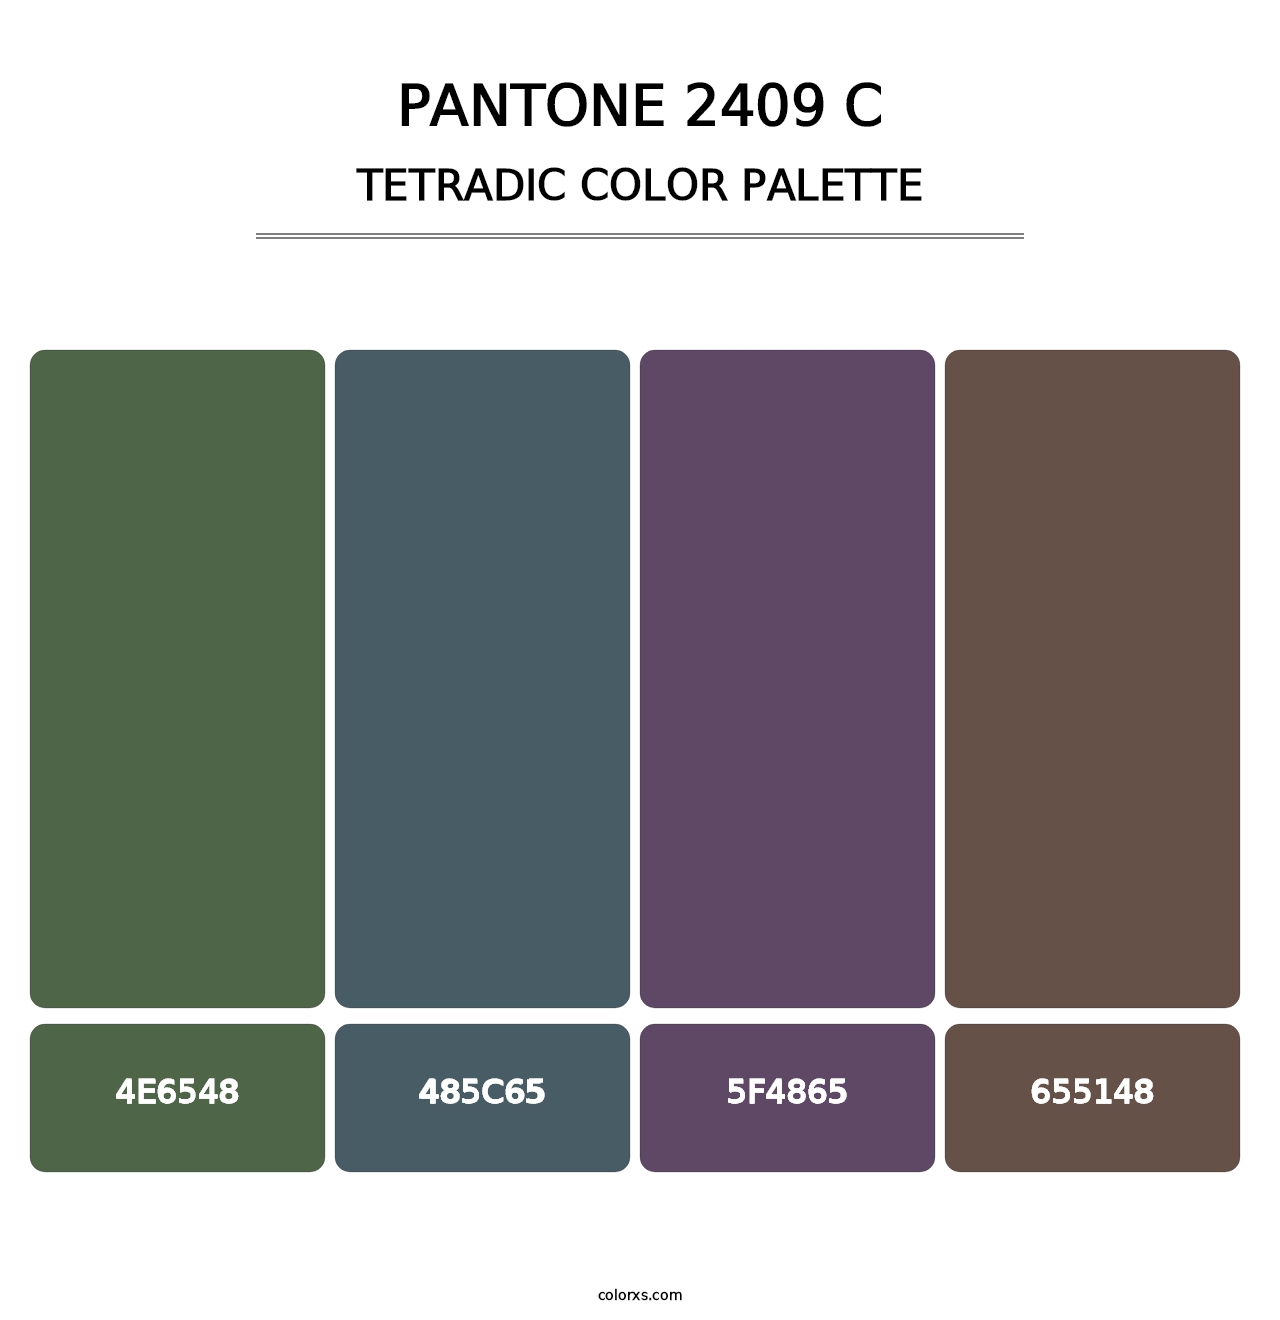 PANTONE 2409 C - Tetradic Color Palette